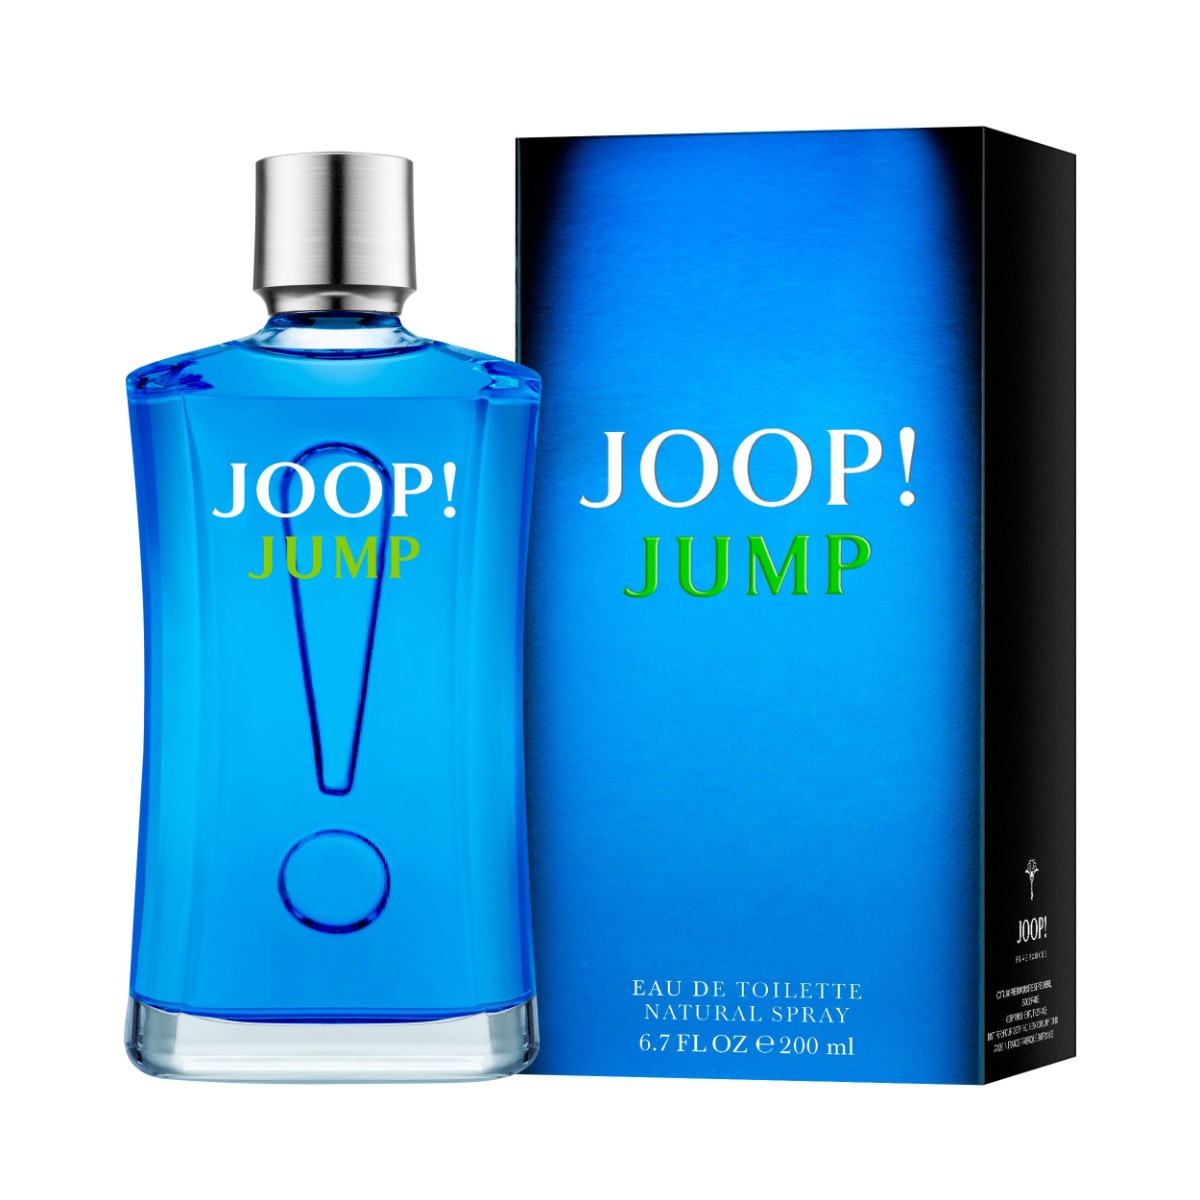 Joop! Jump toaletní voda pro muže 200 ml Joop!